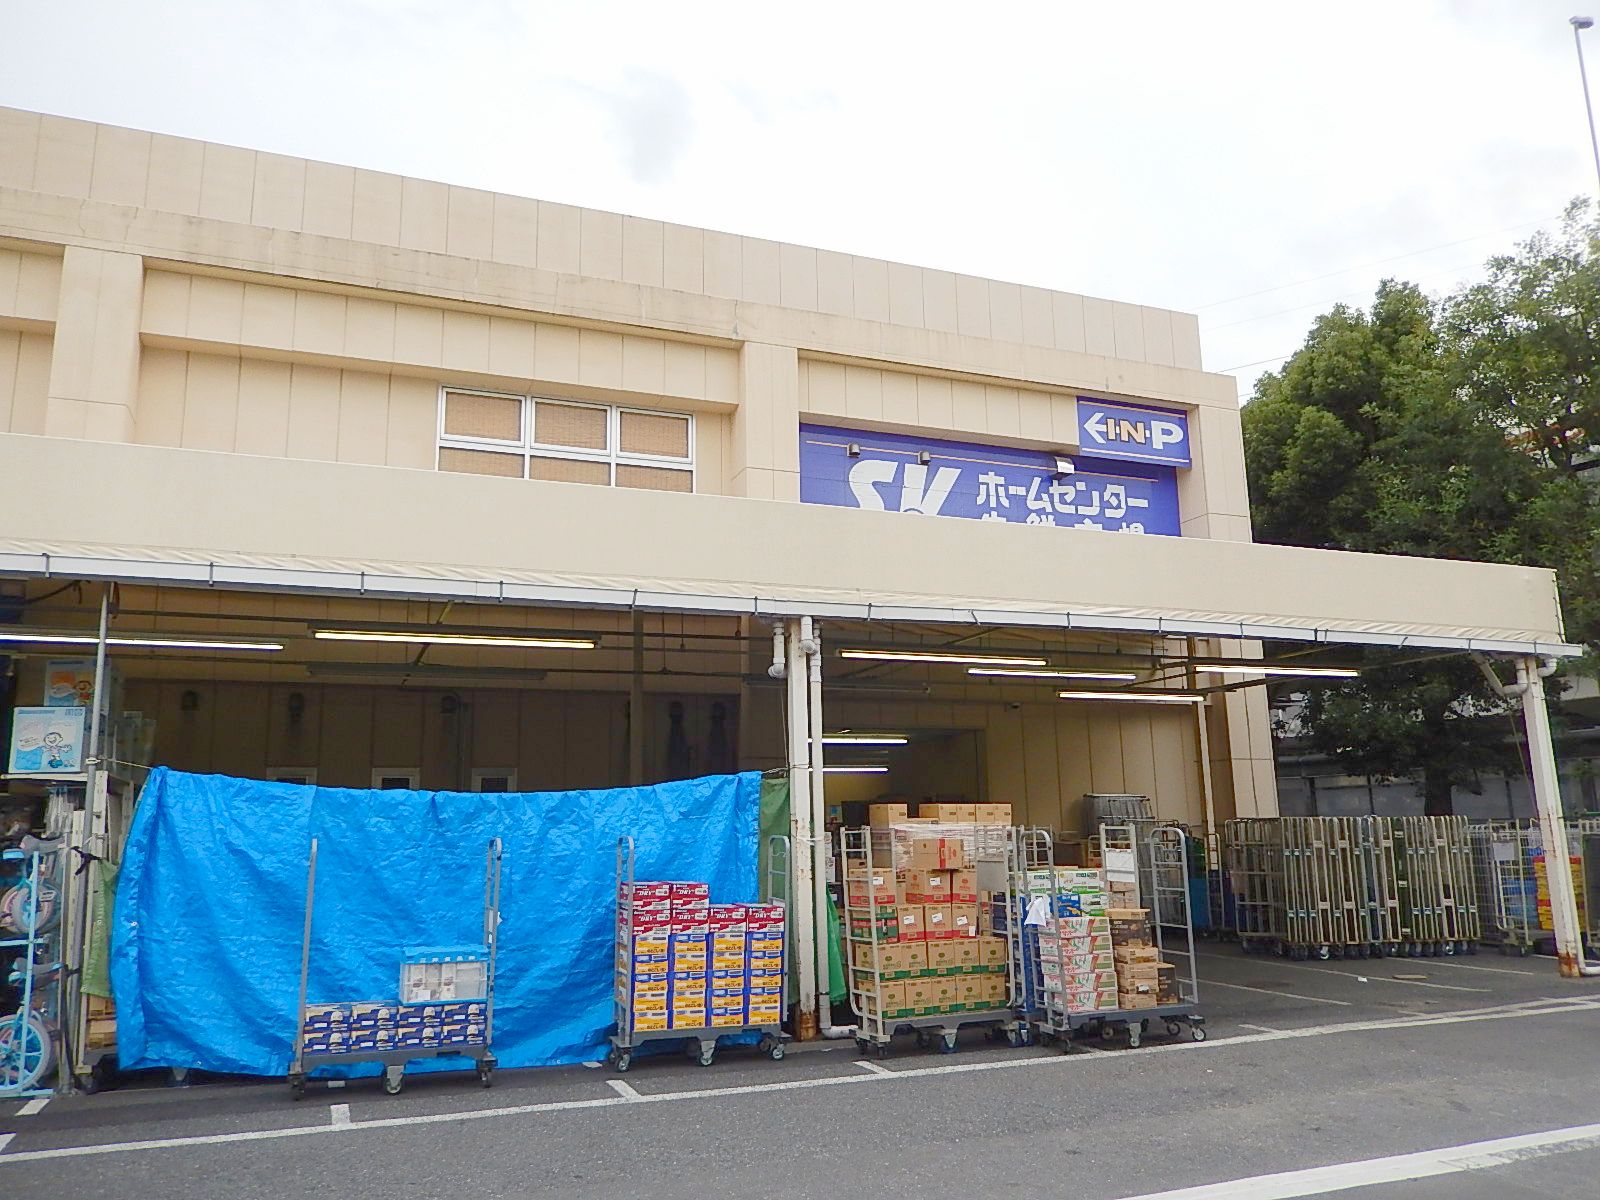 Home center. 472m to Super Value Suginami Takaido store (hardware store)